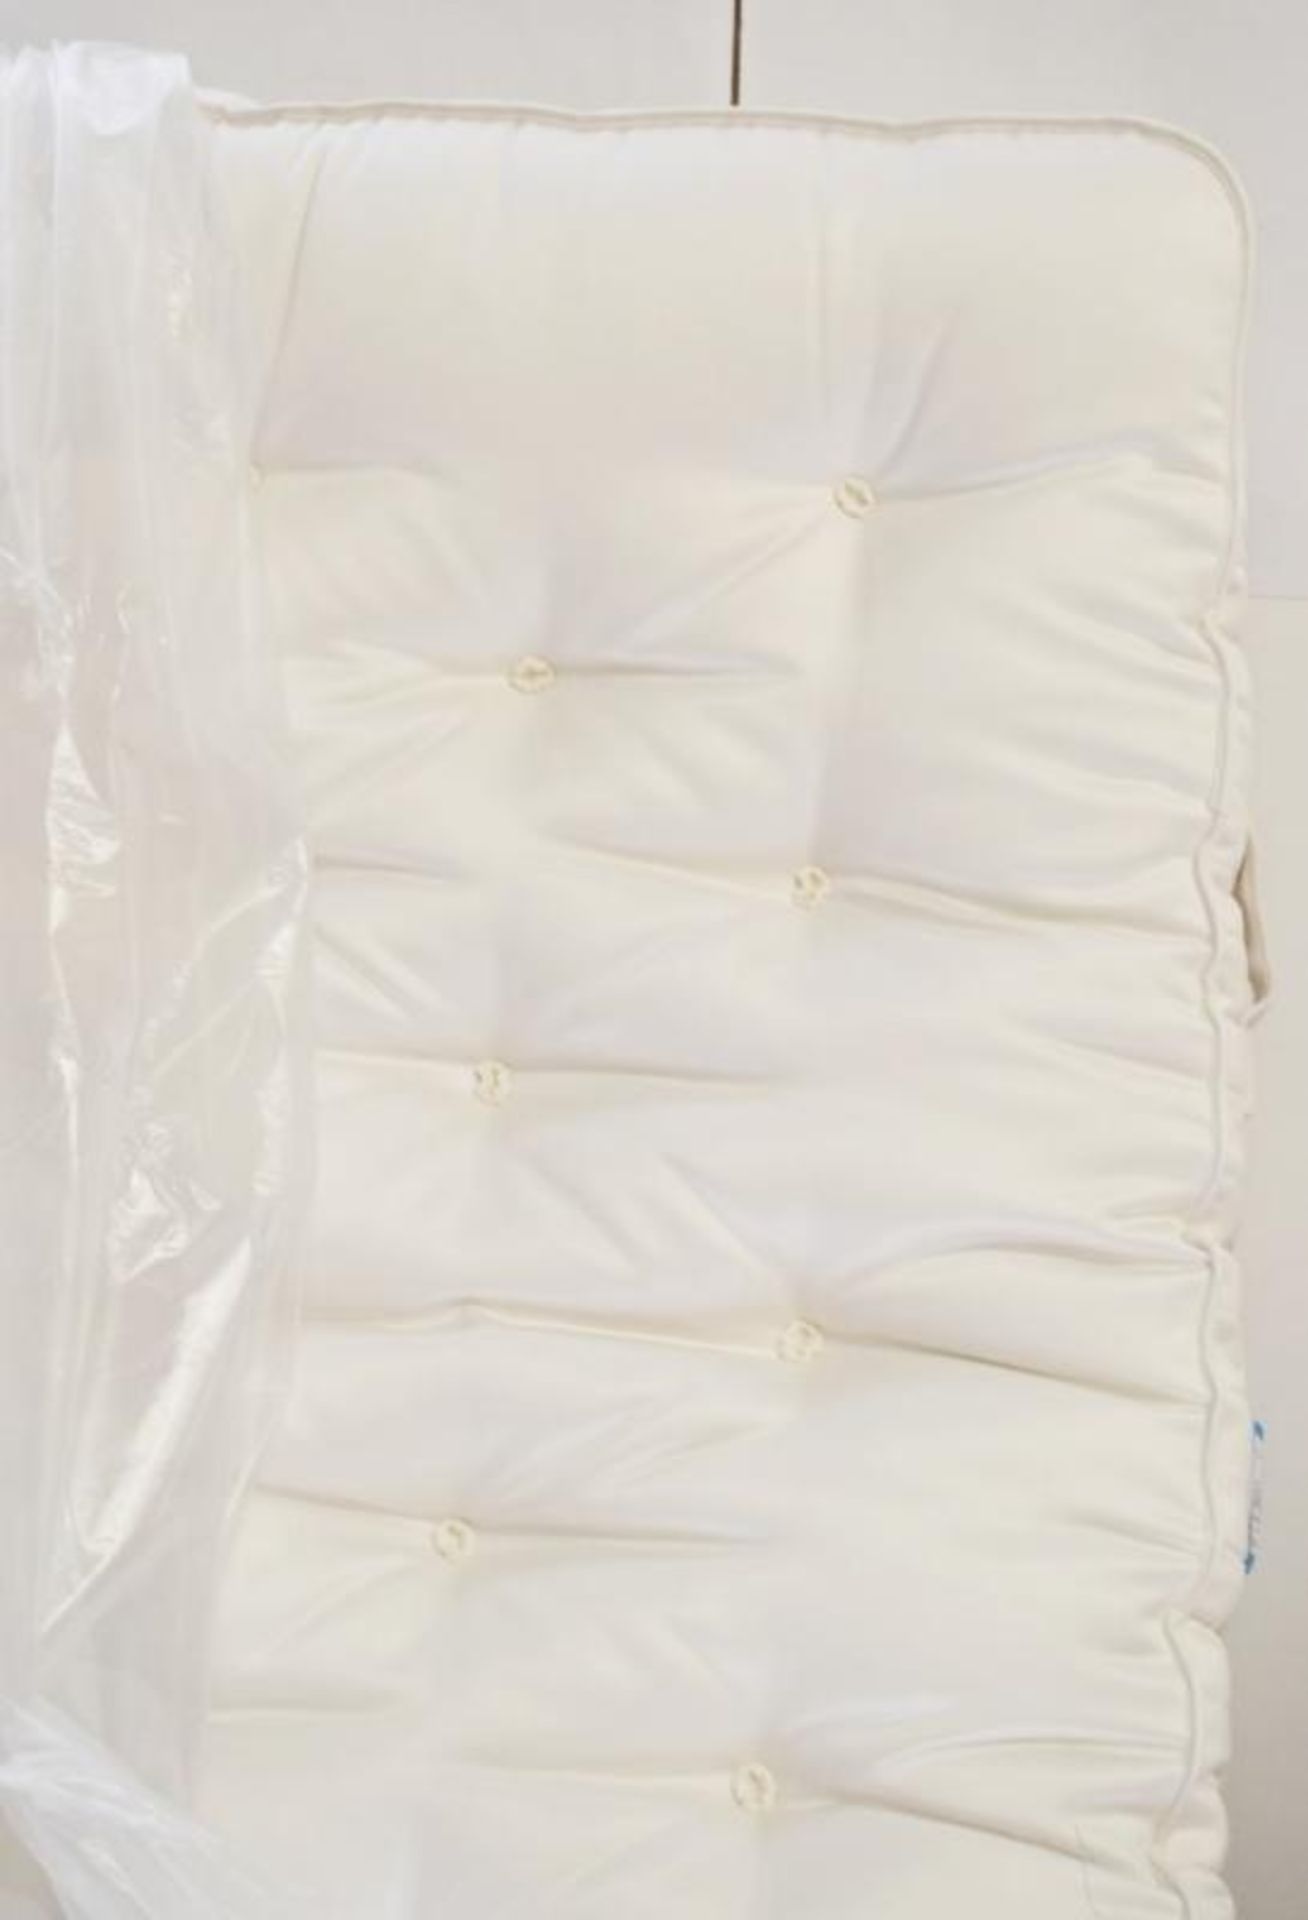 1 x Vispring 'Bedstead Supreme' Luxury Mattress - Custom Size: 175 x 200 x 23cm - Handmade In Great - Image 9 of 10